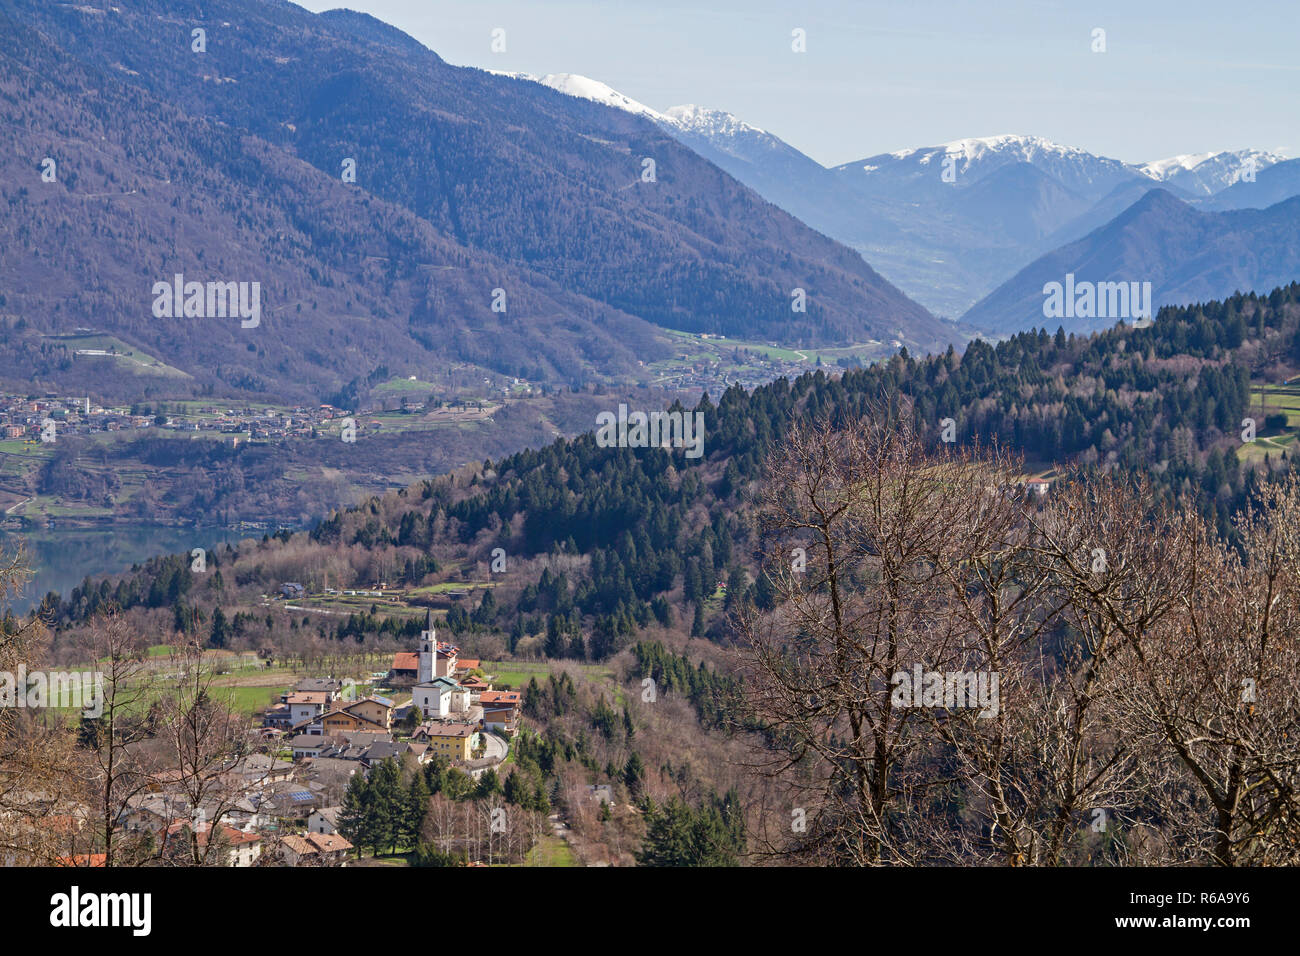 91 5000 View From The Altopiano Della Vigolana To The Small Town Of Caldonazzo And The Lake Of The Same Name Stock Photo